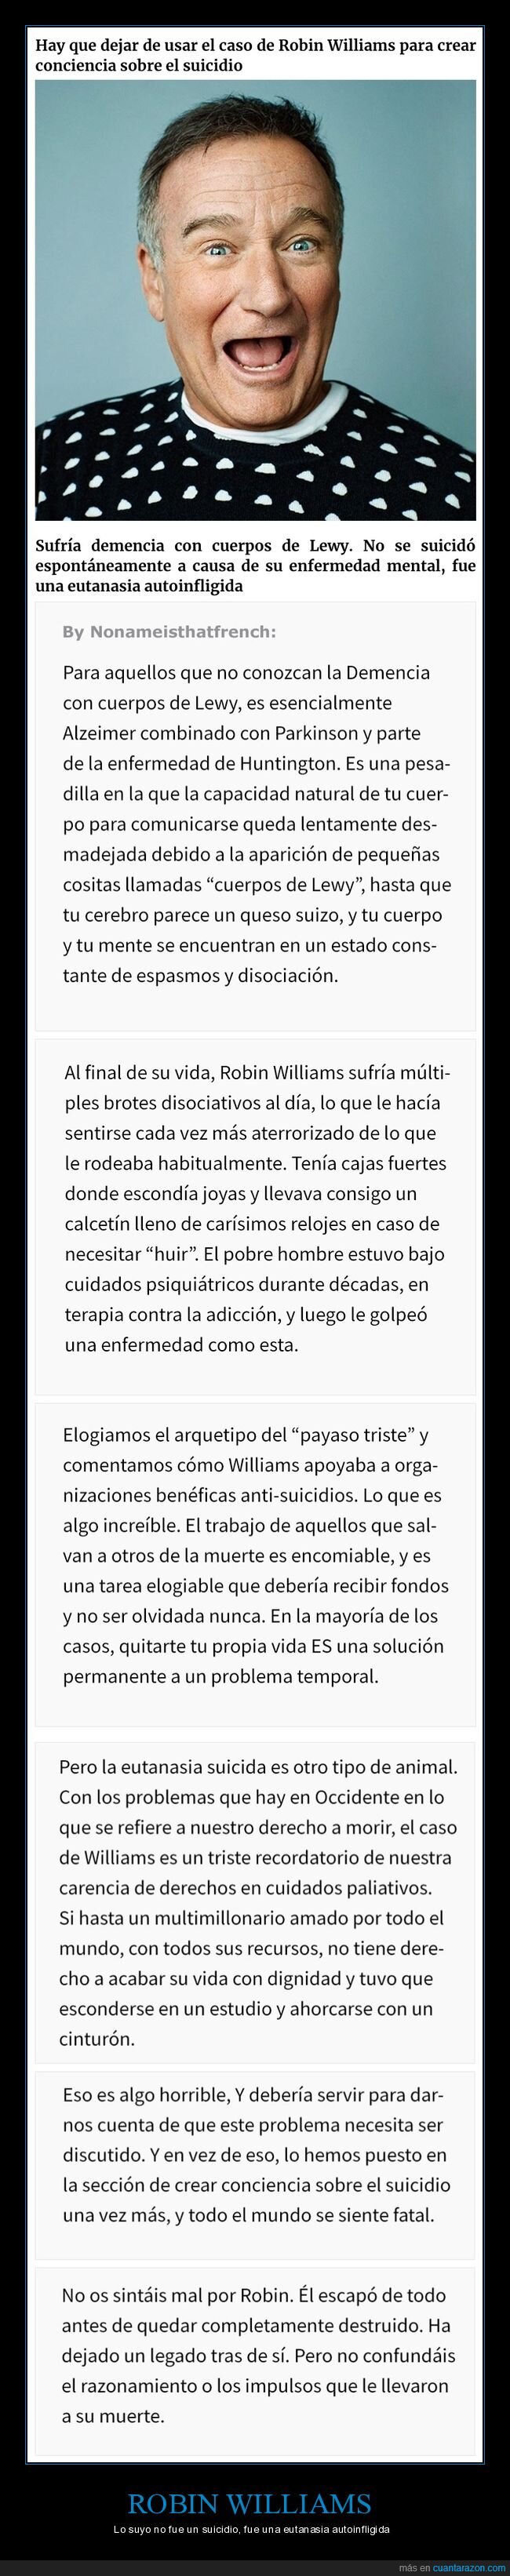 robin williams,suicidio,eutanasia